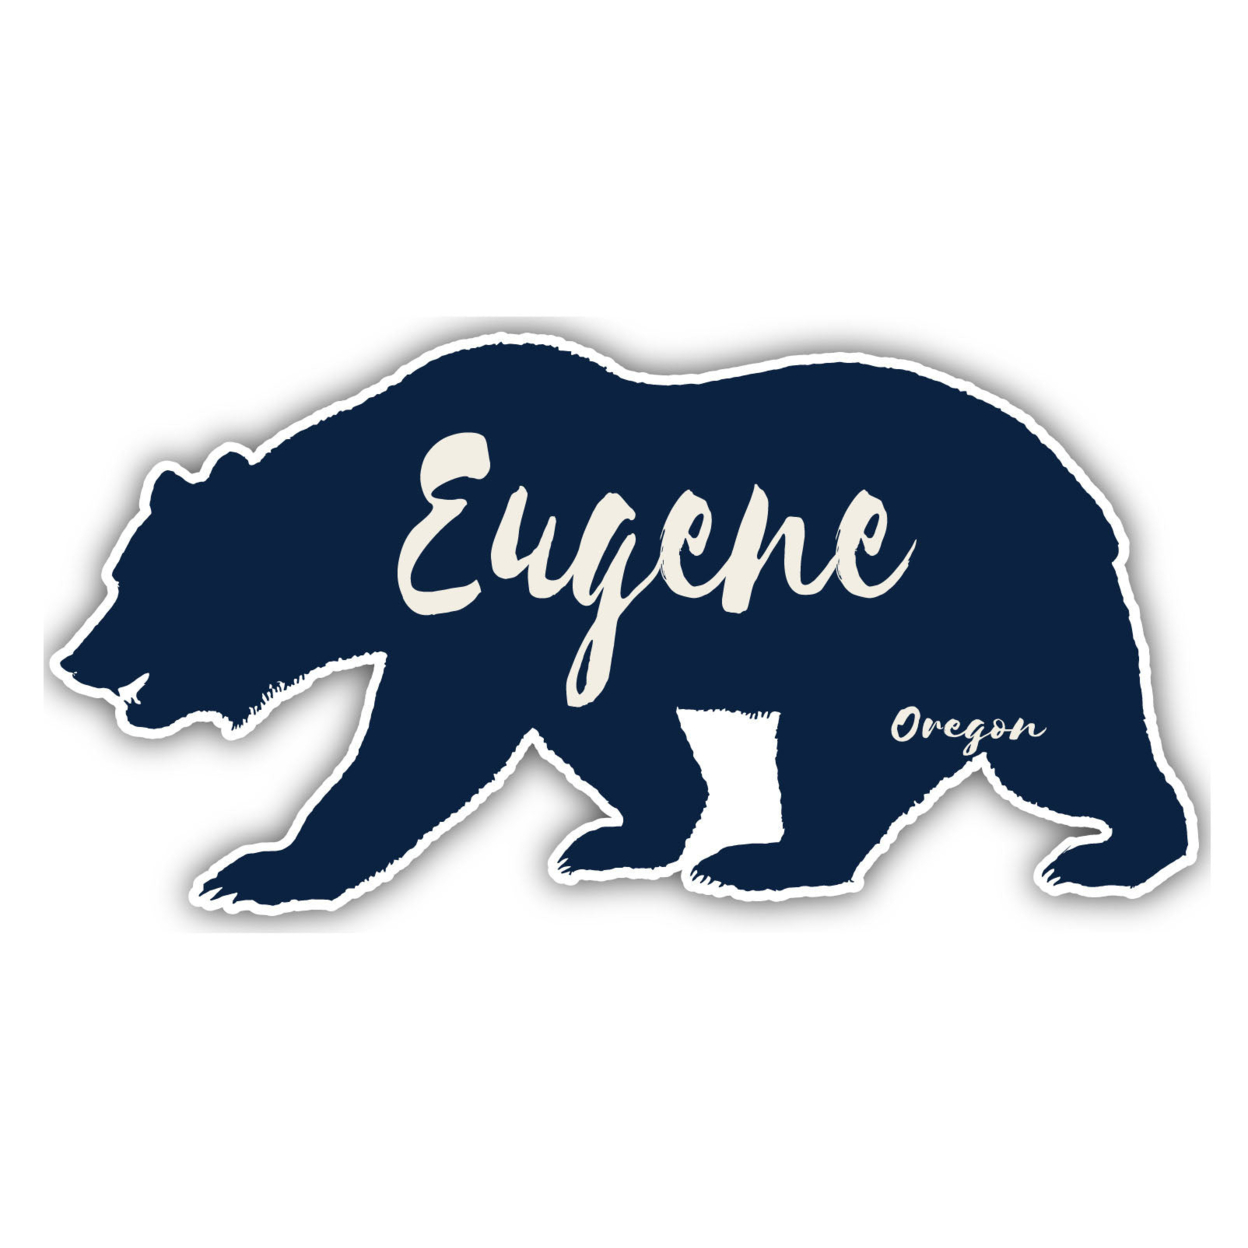 Eugene Oregon Souvenir Decorative Stickers (Choose Theme And Size) - 4-Pack, 8-Inch, Bear